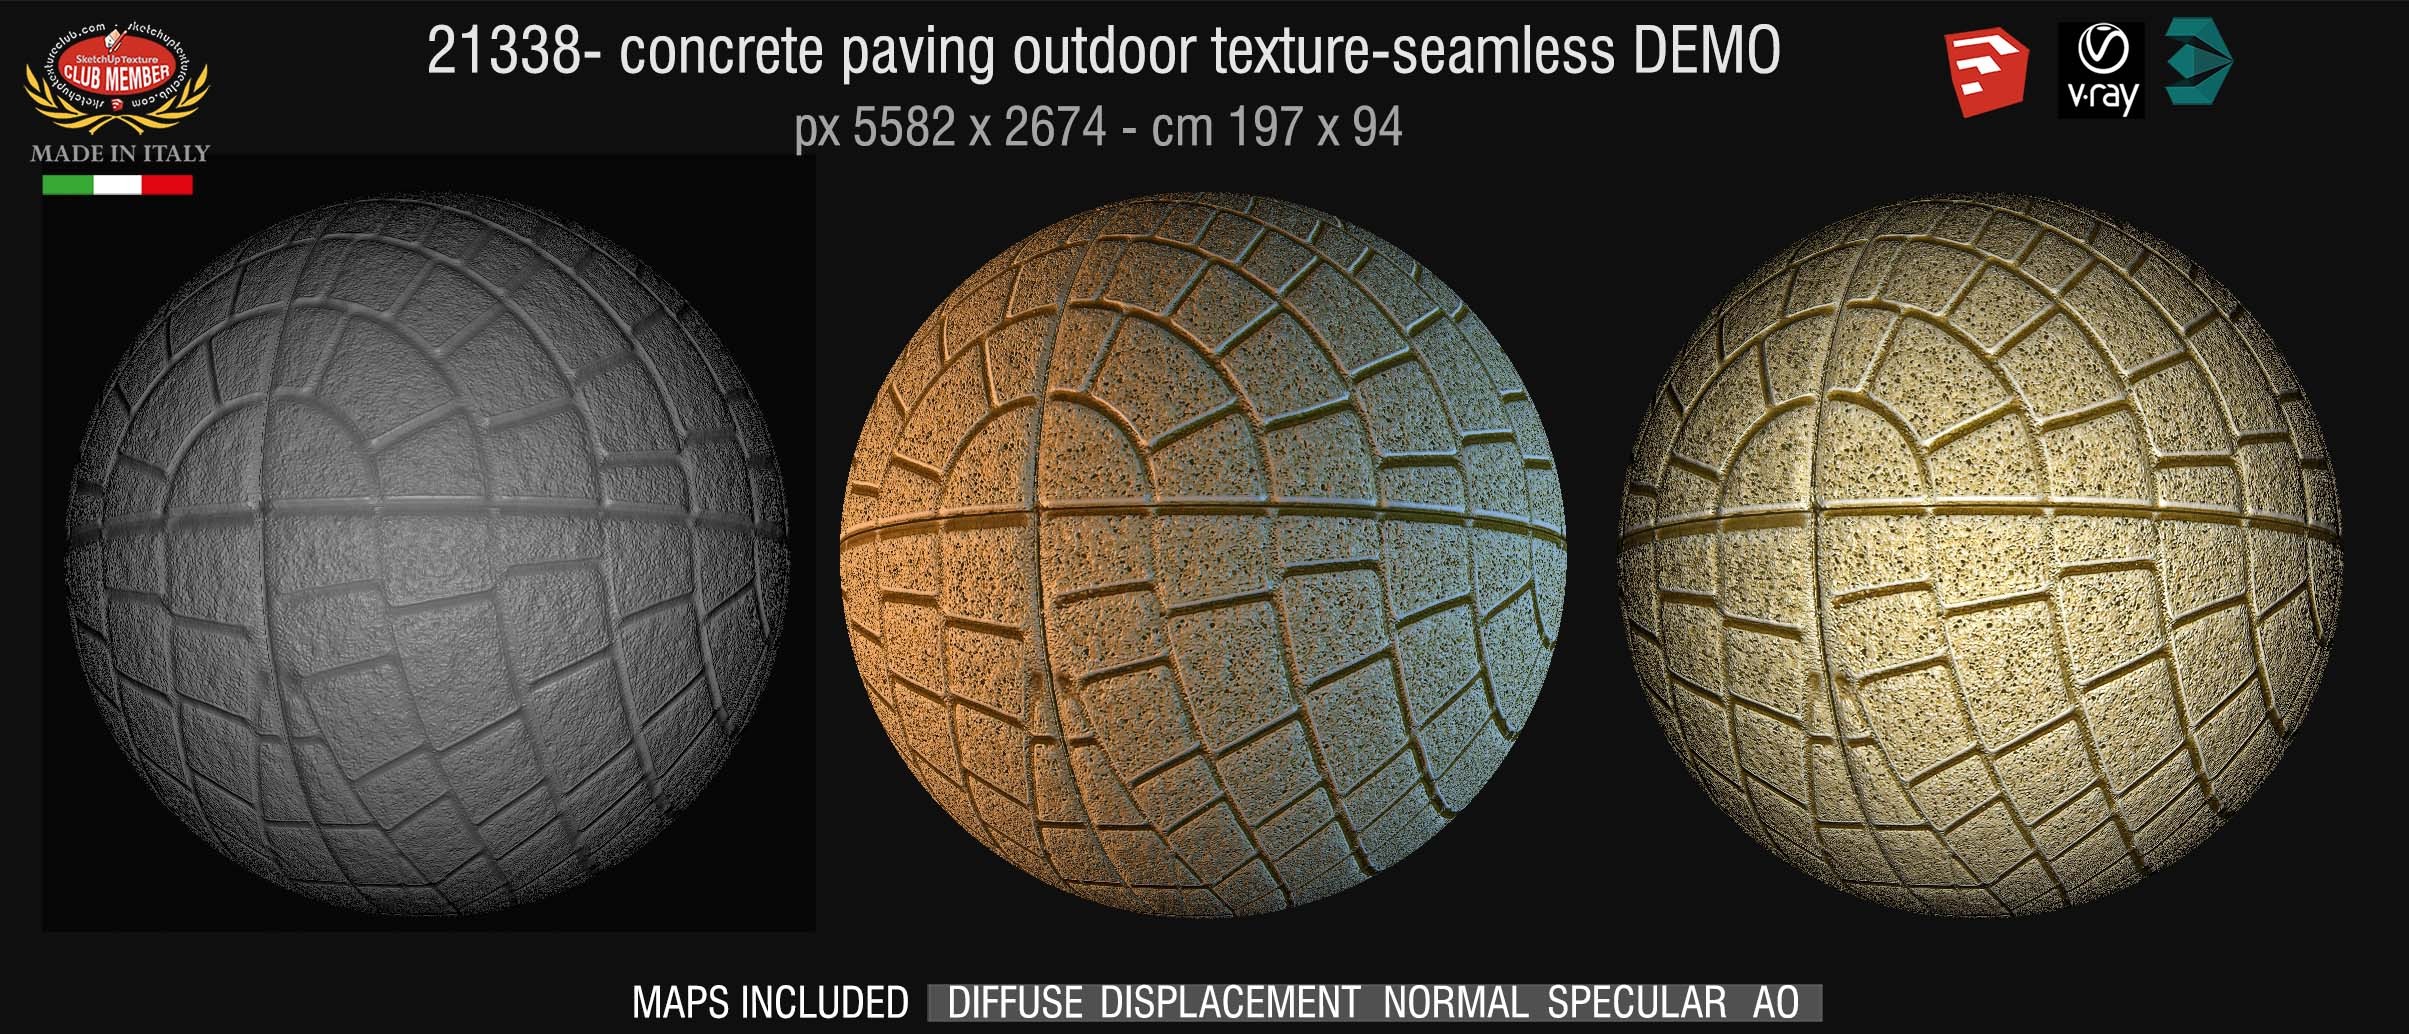 21338 HR concrete paving outdoor texture seamless + maps DEMO